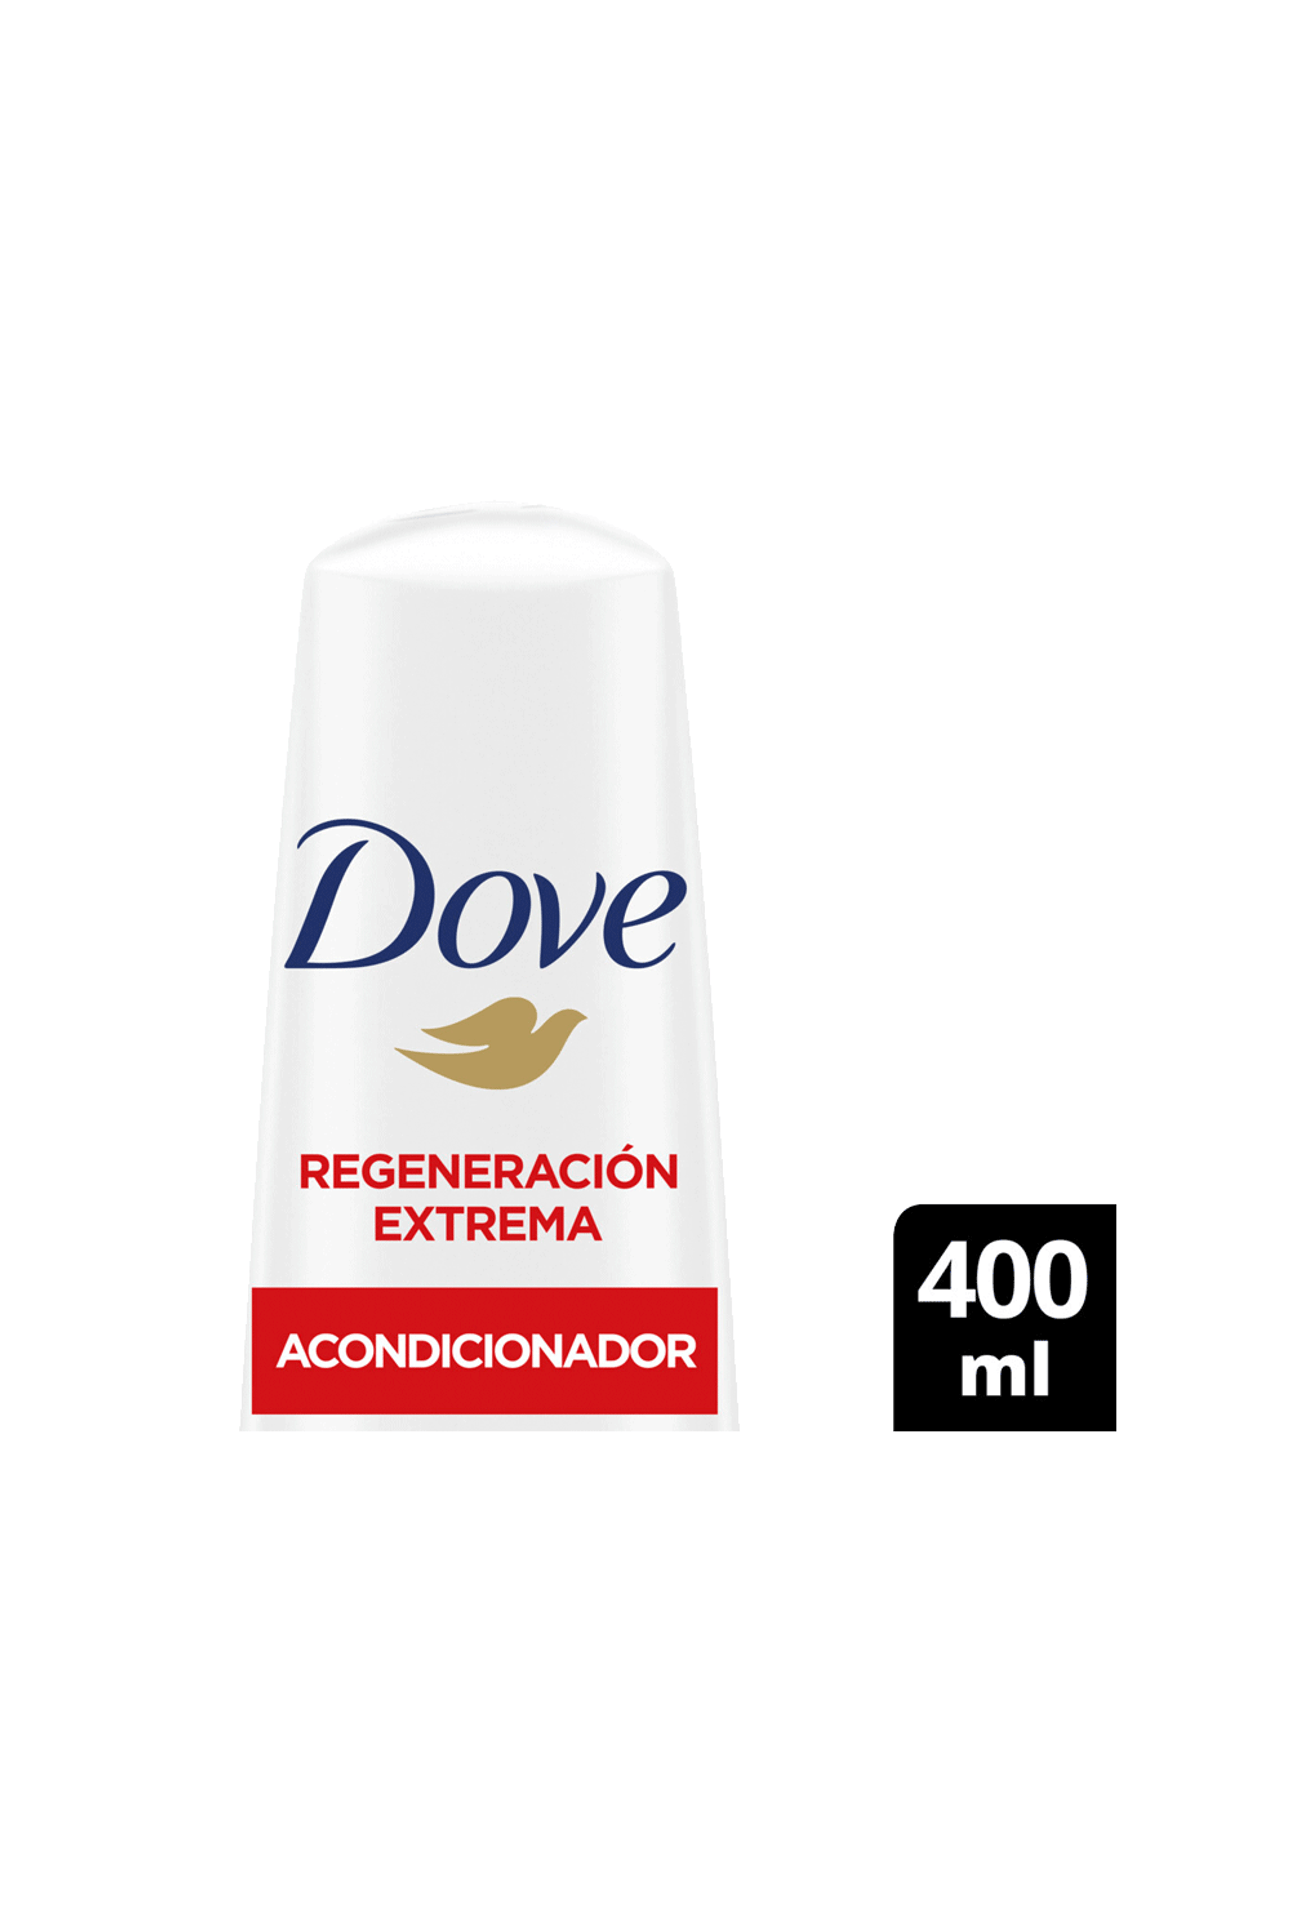 Dove-Acondicionador-Dove-Regeneracion-Extrema-x-400ml-7791293047522_img1